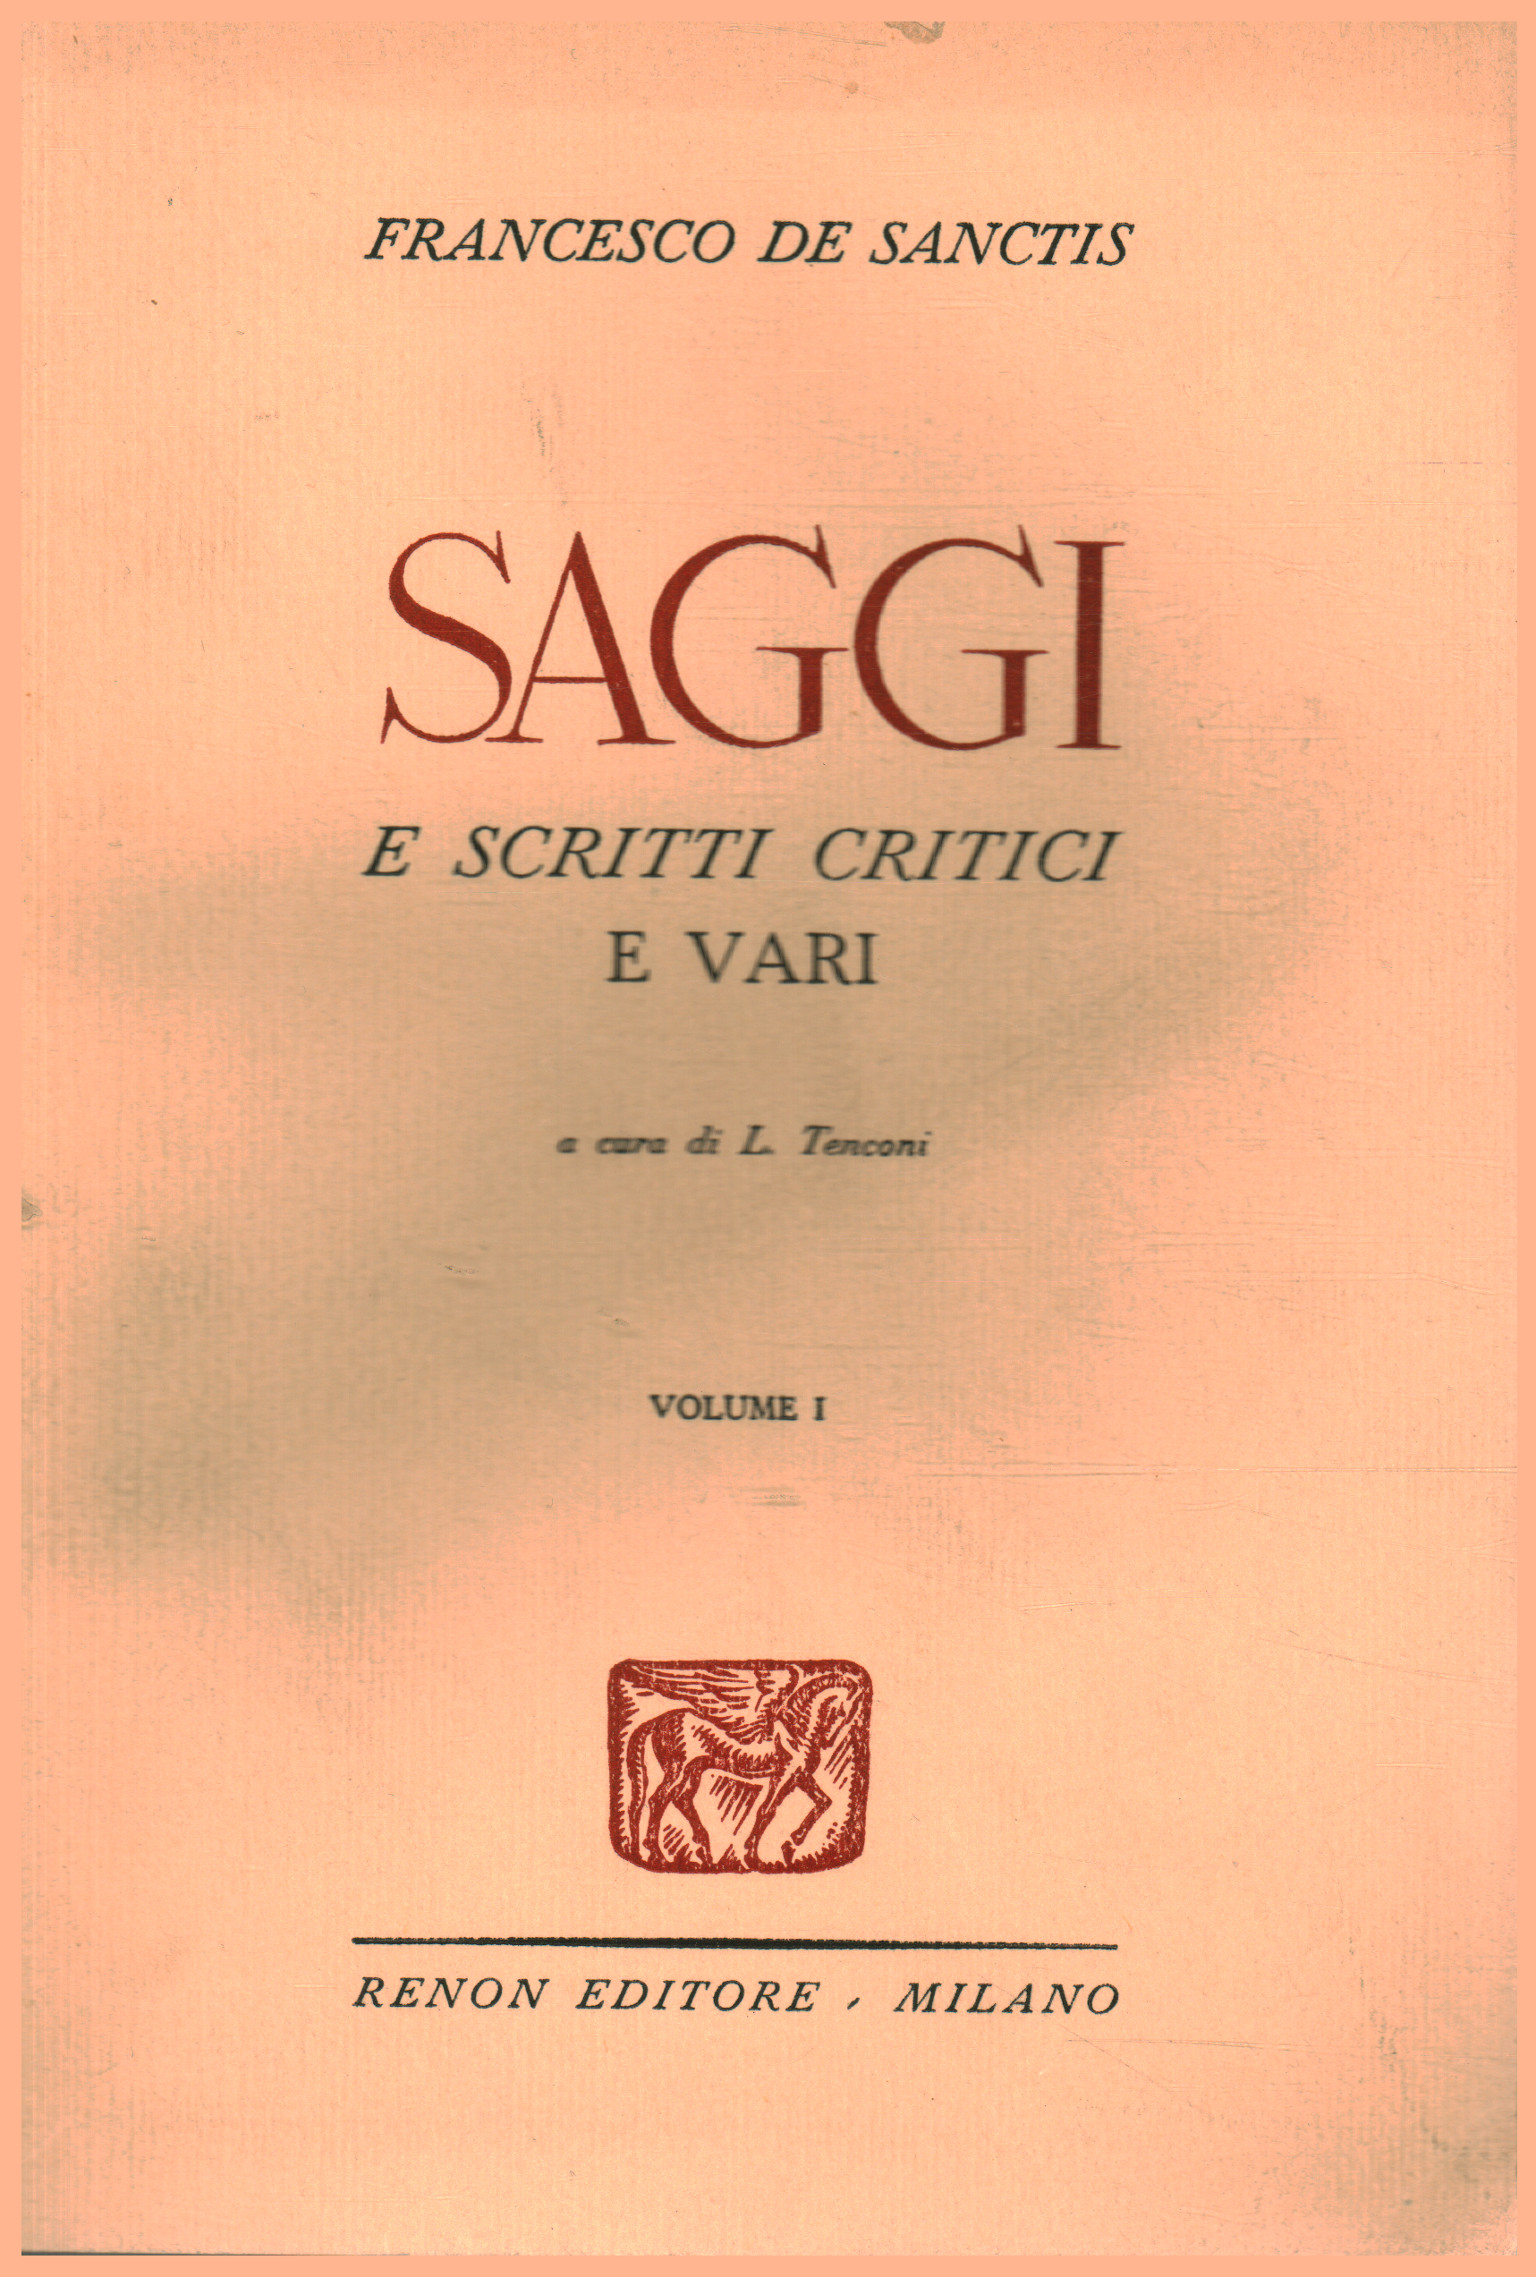 Saggi e scritti critici e vari. Volume primo, Francesco De Sanctis